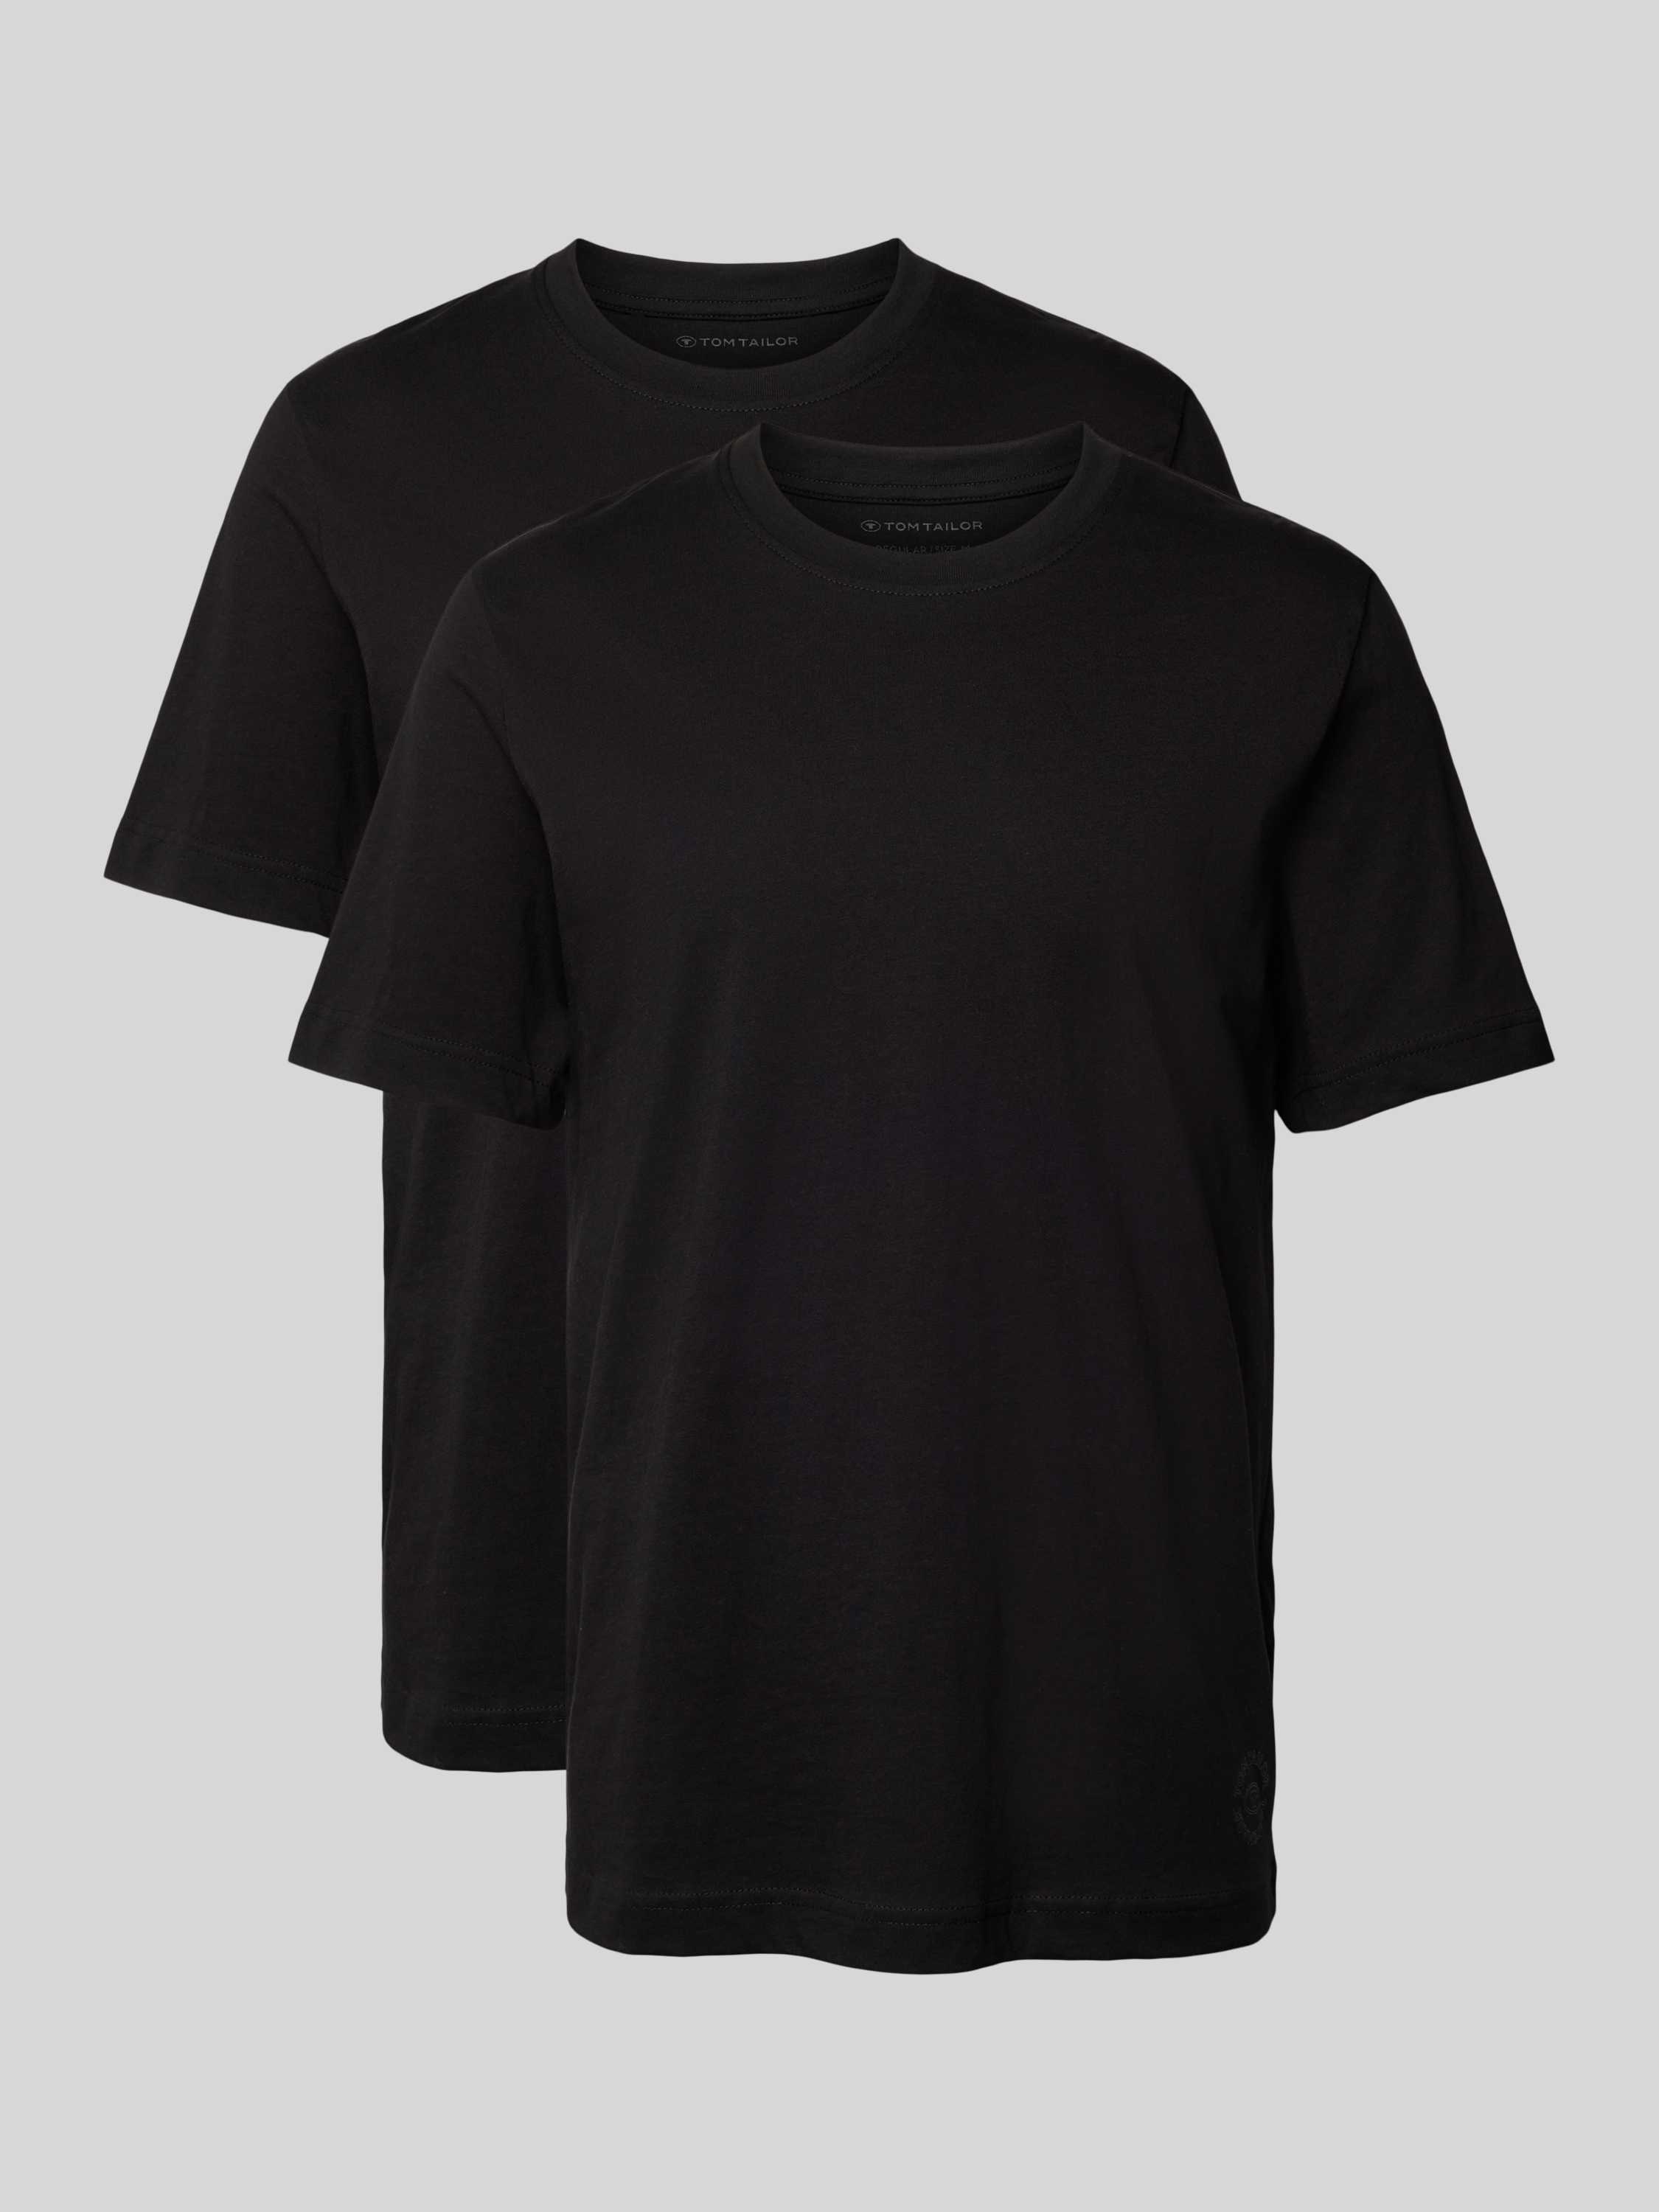 T-Shirt im unifarbenen Design im 2er-Pack